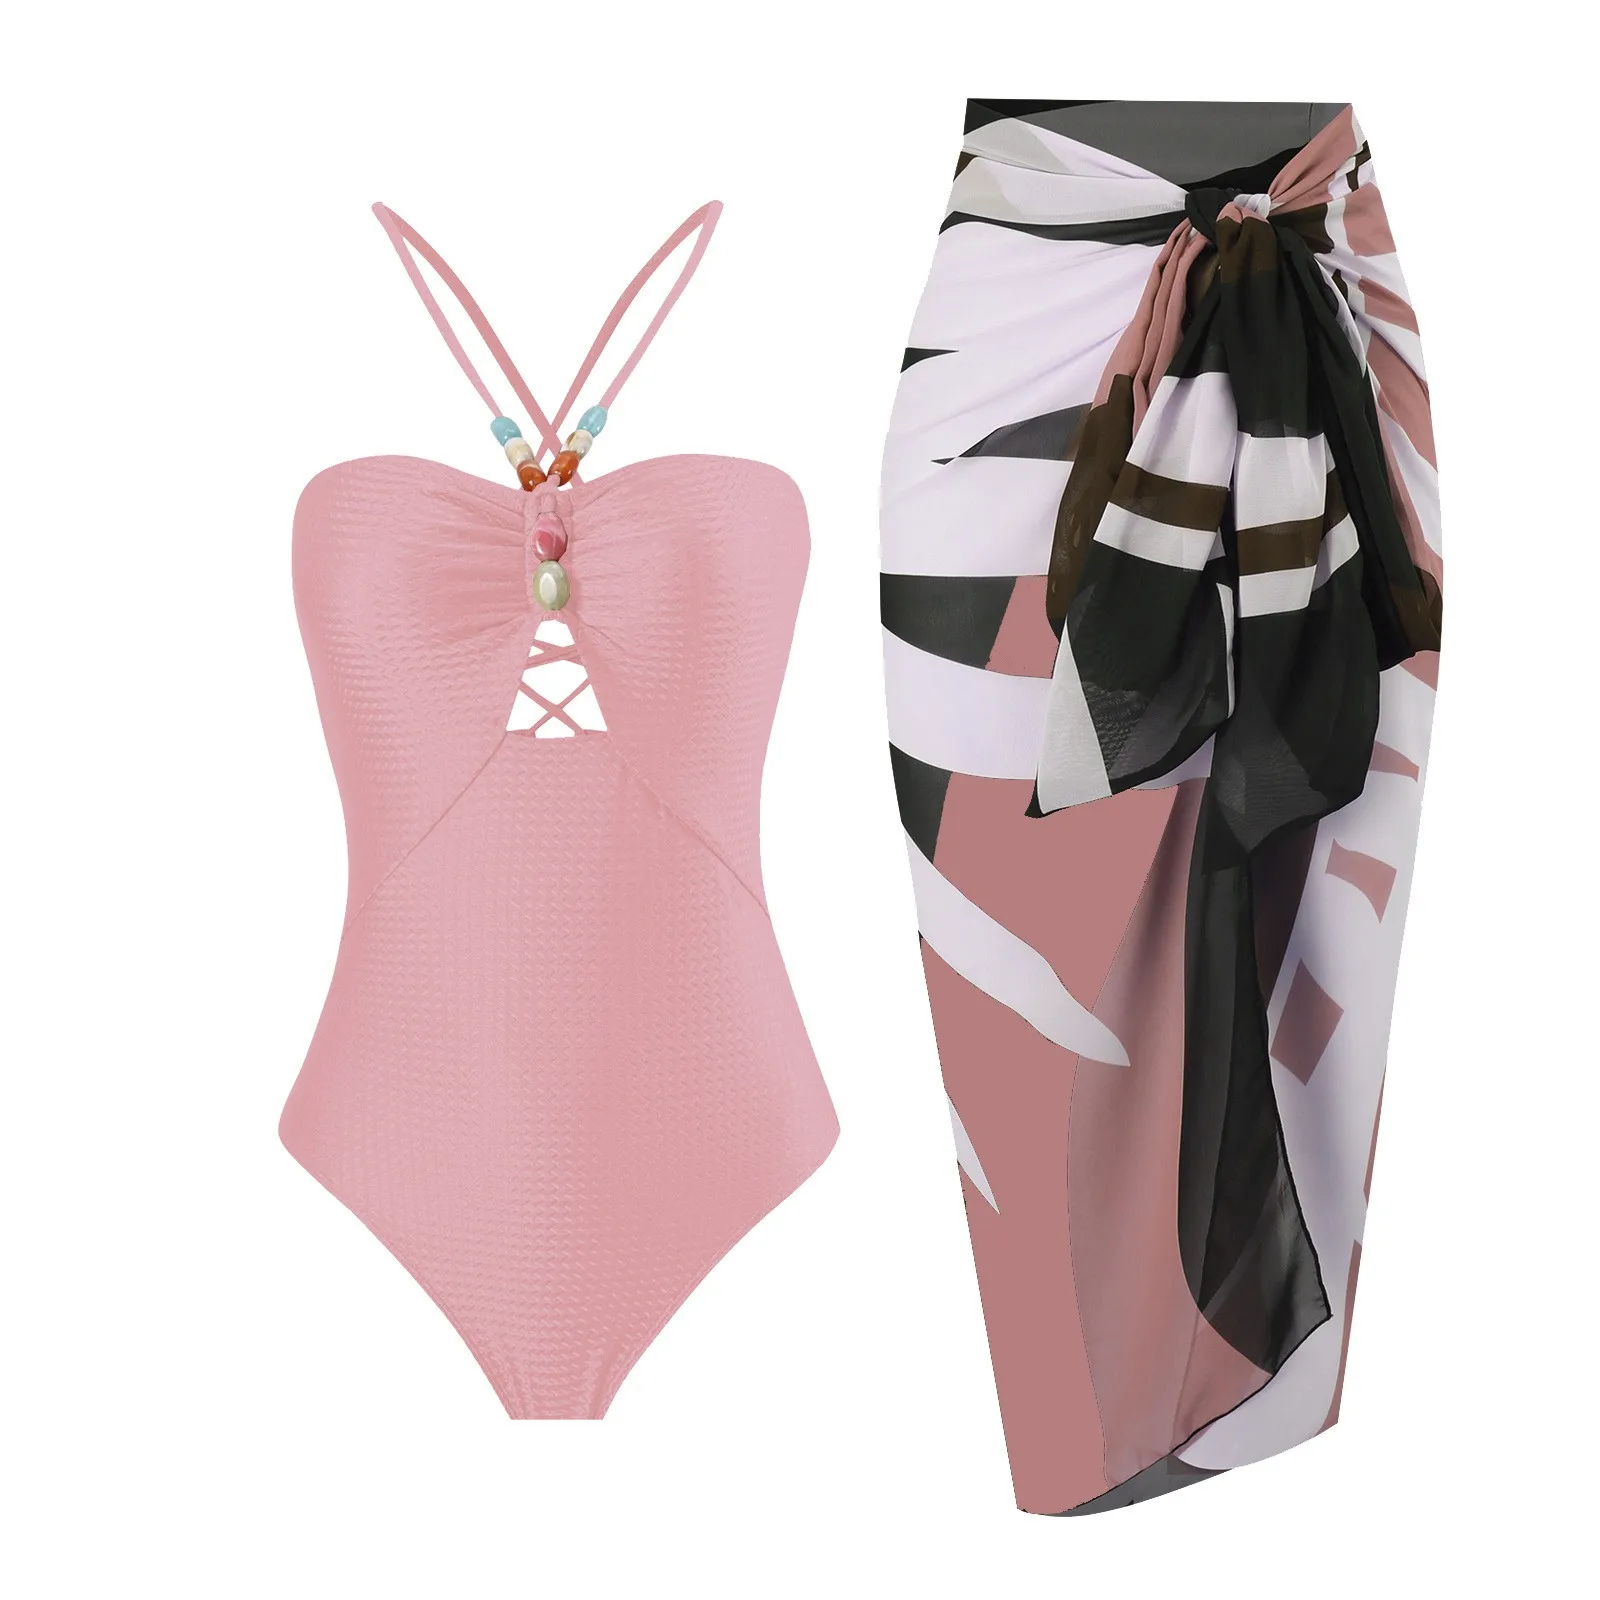 

Women's Sexy Slim Fit Two-Piece With Printed Swimsuit Long Skirt Set купальники женские 수영복 여자 Traje baño mujer Biquínis